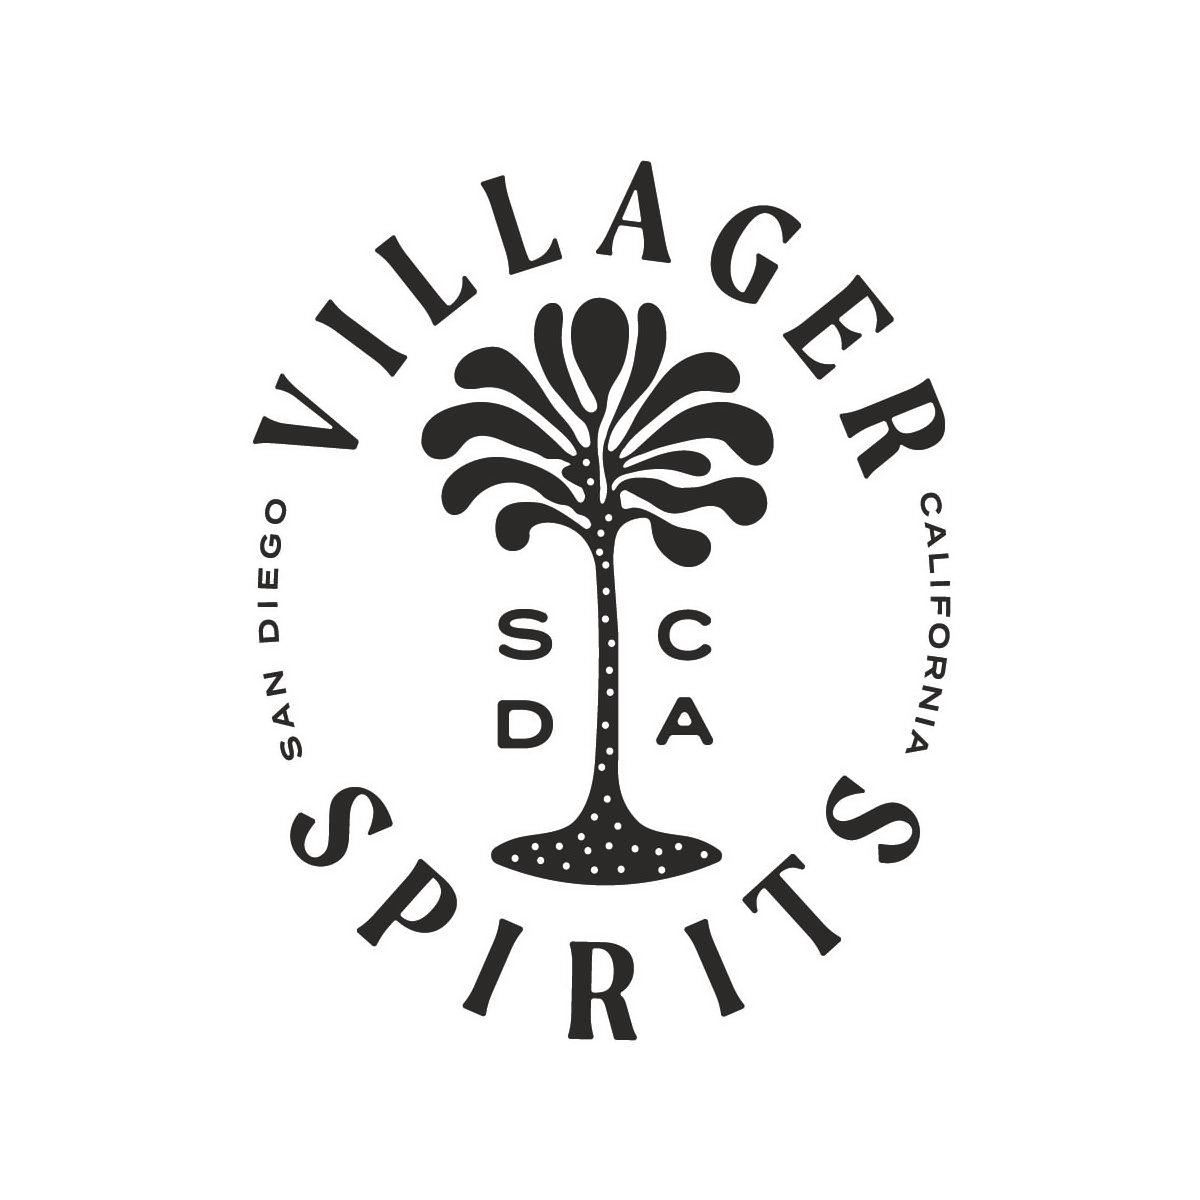  VILLAGER SPIRITS SAN DIEGO CALIFORNIA SD CA